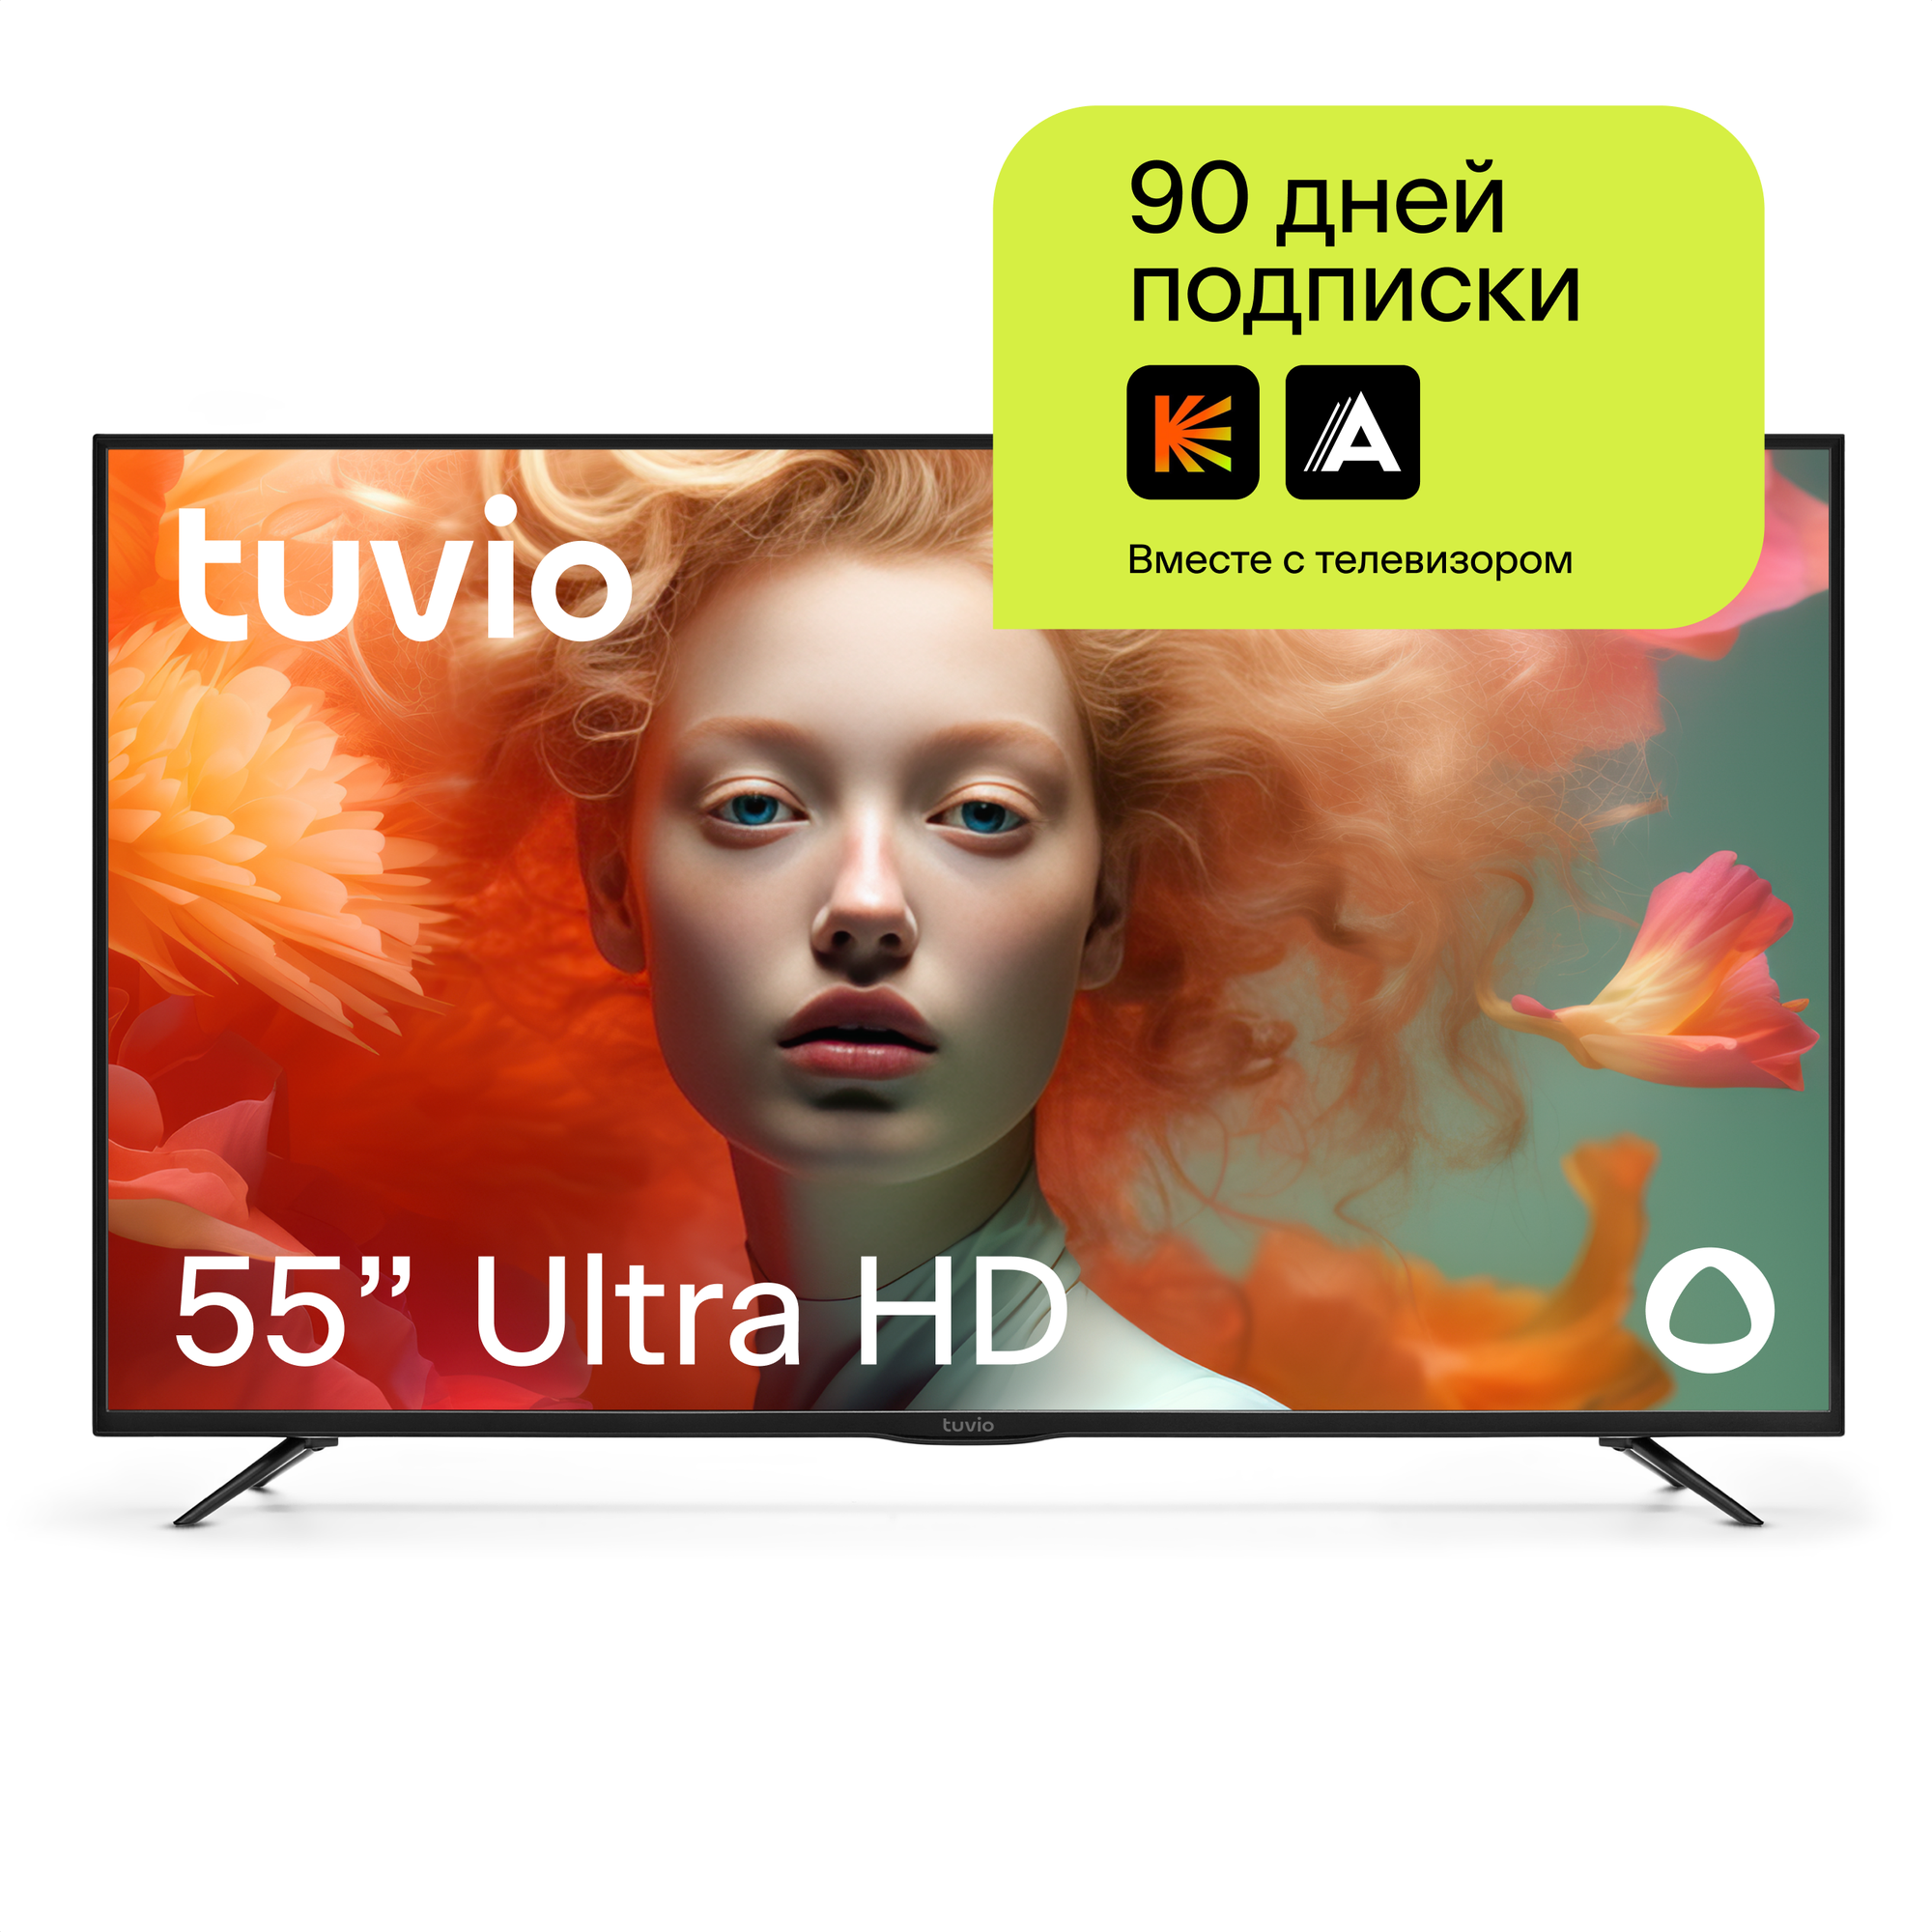 55” Телевизор Tuvio 4K ULTRA HD DLED на платформе Яндекс.ТВ, STV-55FDUBK1R, черный